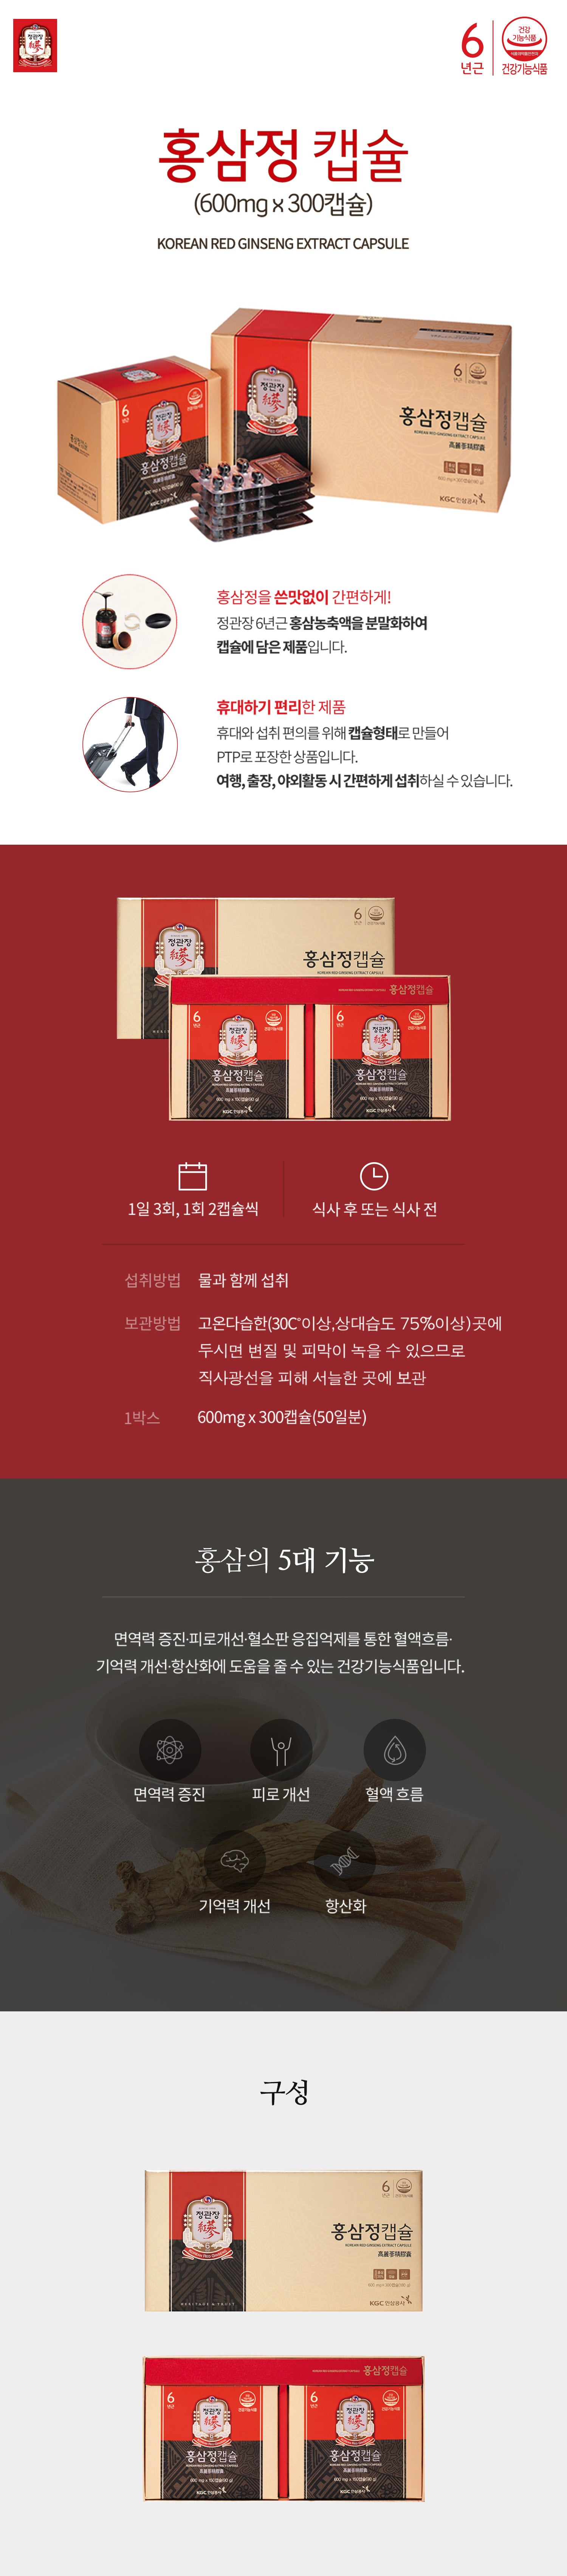 extrait-de-ginseng-rouge-coreen-300-capsules-cheongkwanjang